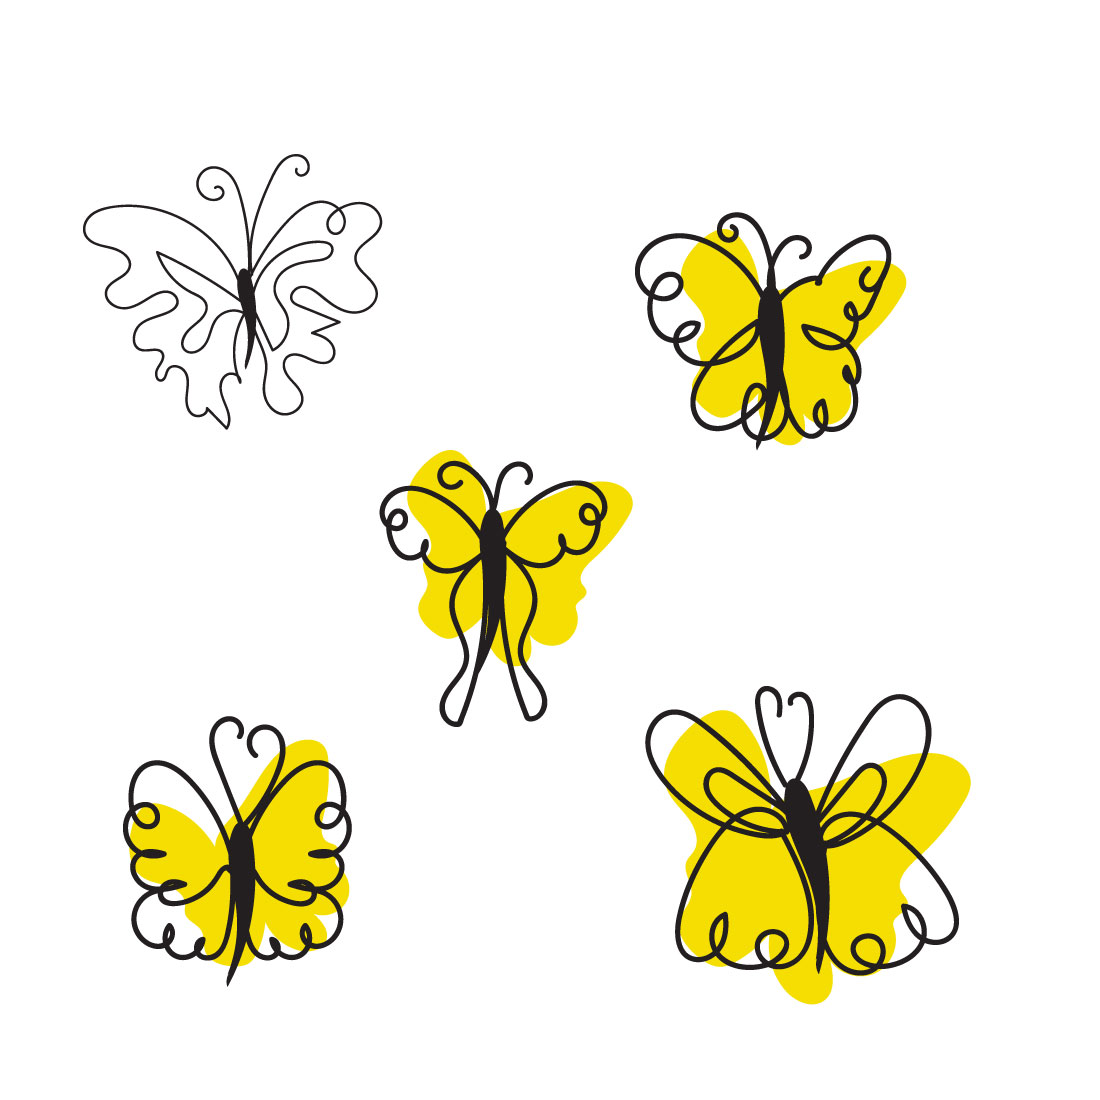 Butterfly Liner Art Flat Illustration cover image.